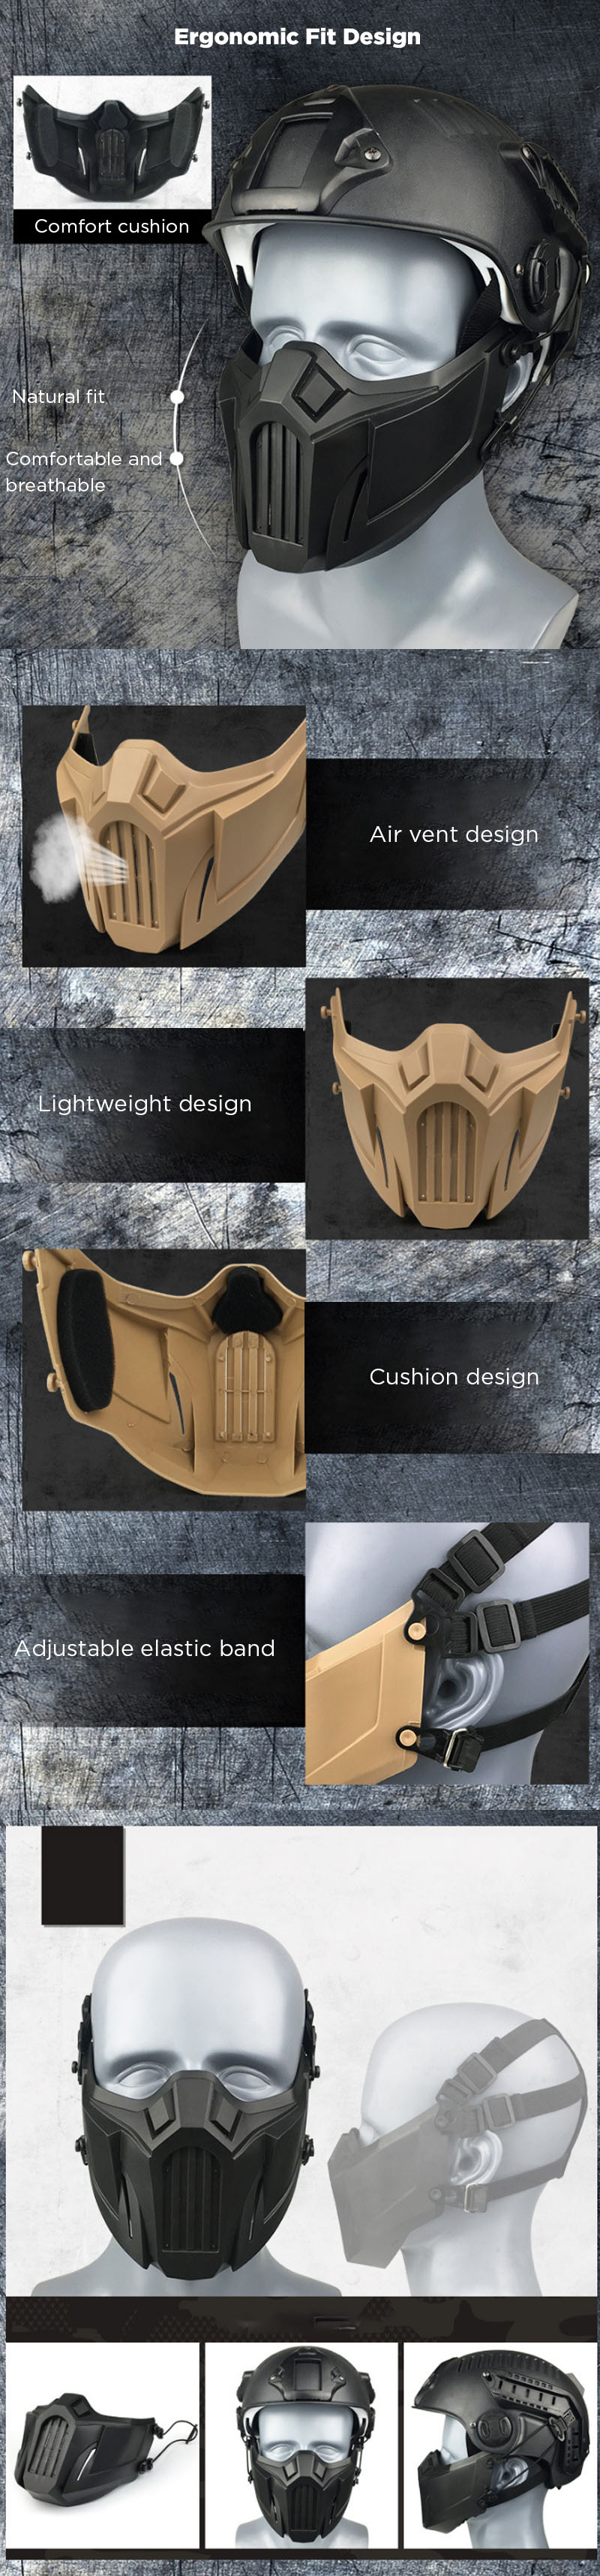 Anti-Dust-Breathable-CS-Mask-Safety-Protective-Tactical-Half-Face-Mask-Adjustable-Elastic-Bandage-Ma-1659307-3